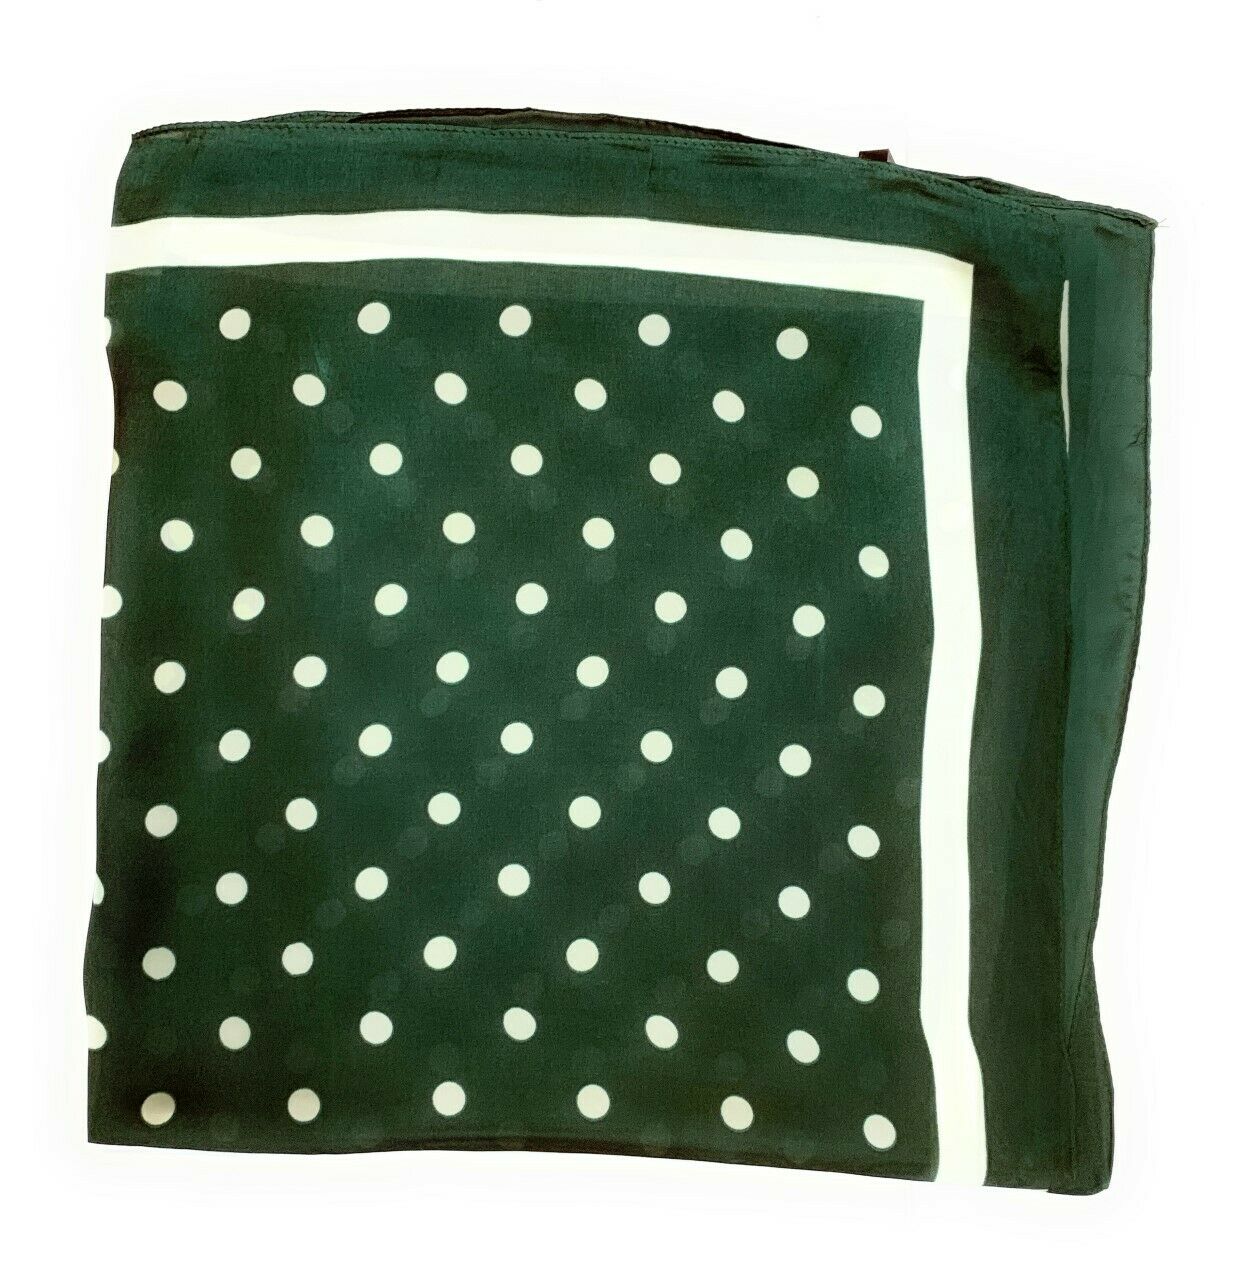 Big Square Ladies Womans Faux Silk Head Neck Thin Scarf Bag Charm - 70cm x 70cm [Emerald Green Polka Dots]